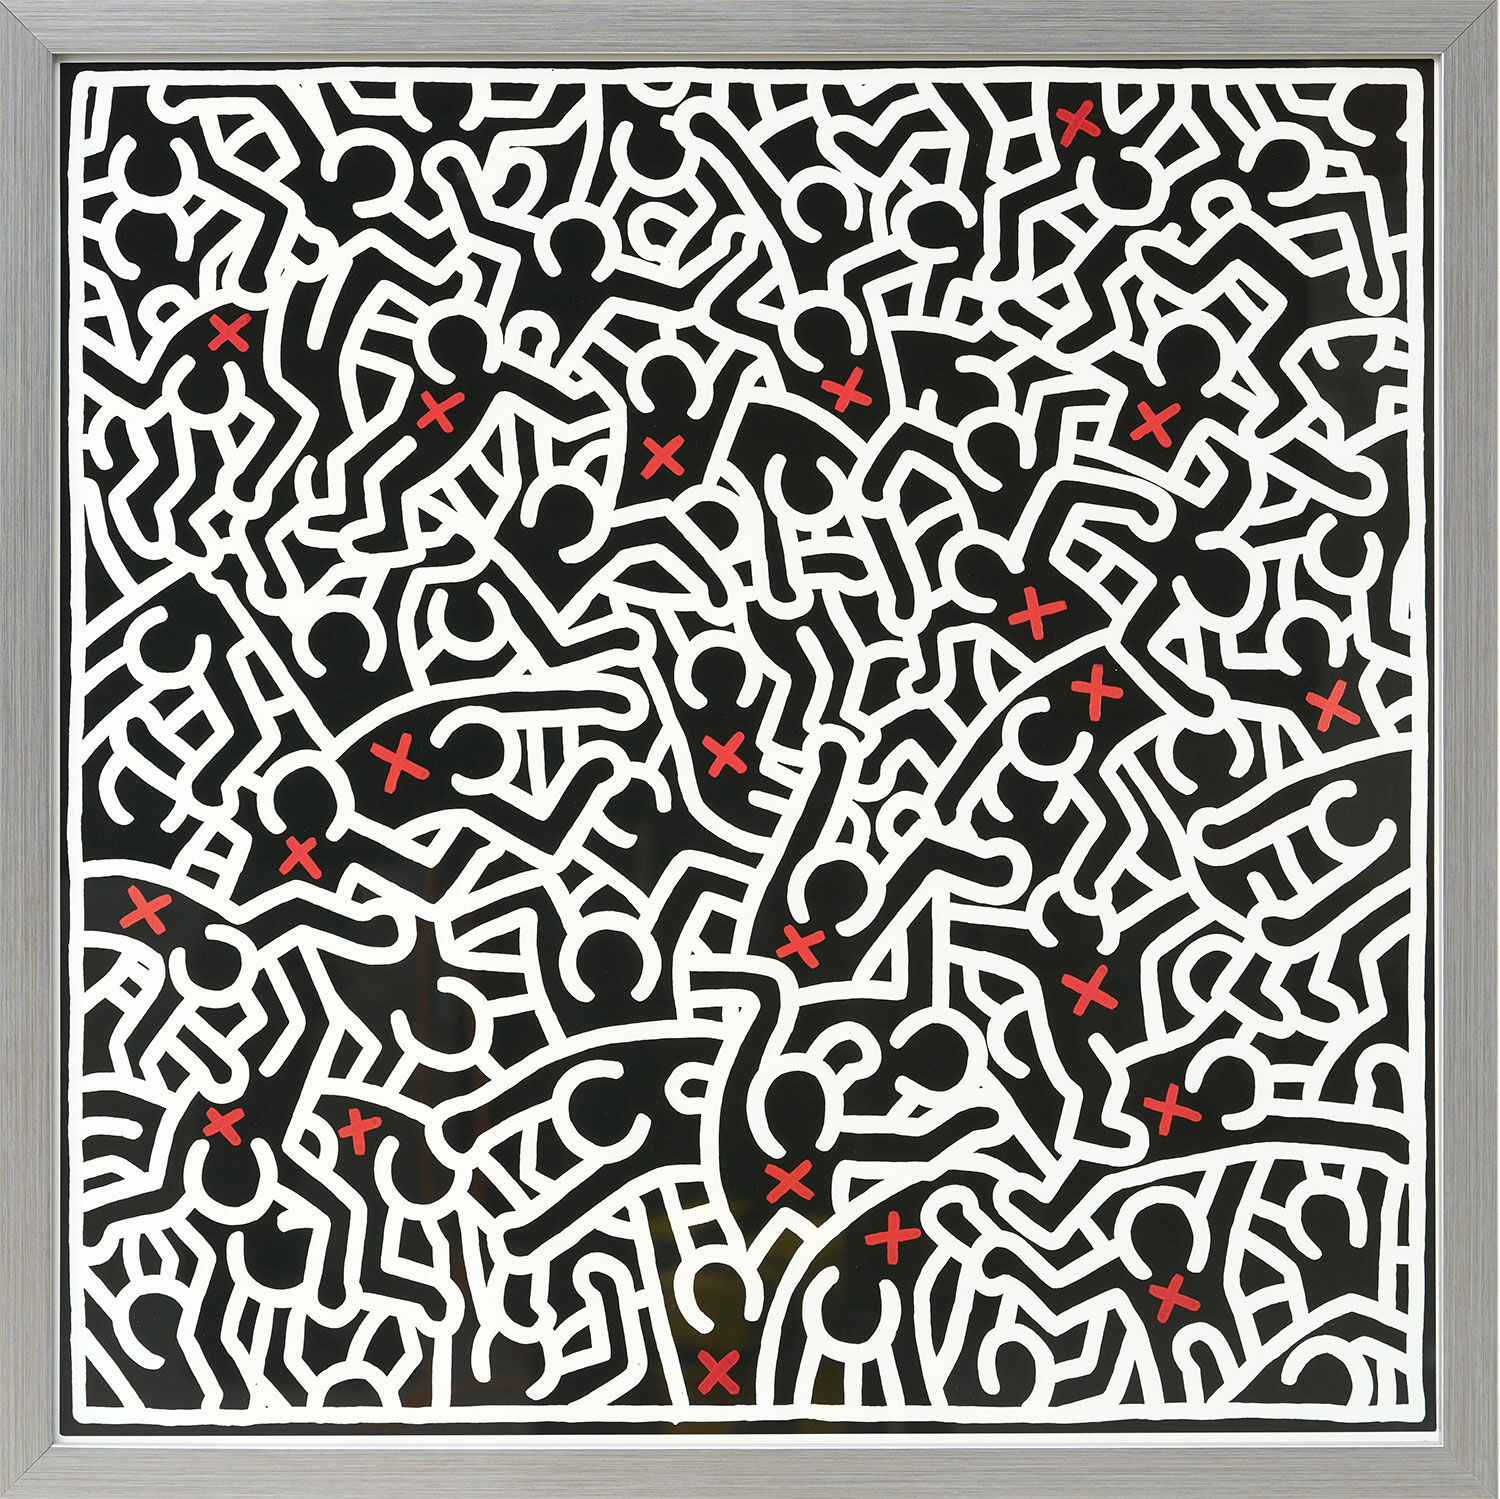 Beeld "Zonder titel, april" (1985), ingelijst von Keith Haring